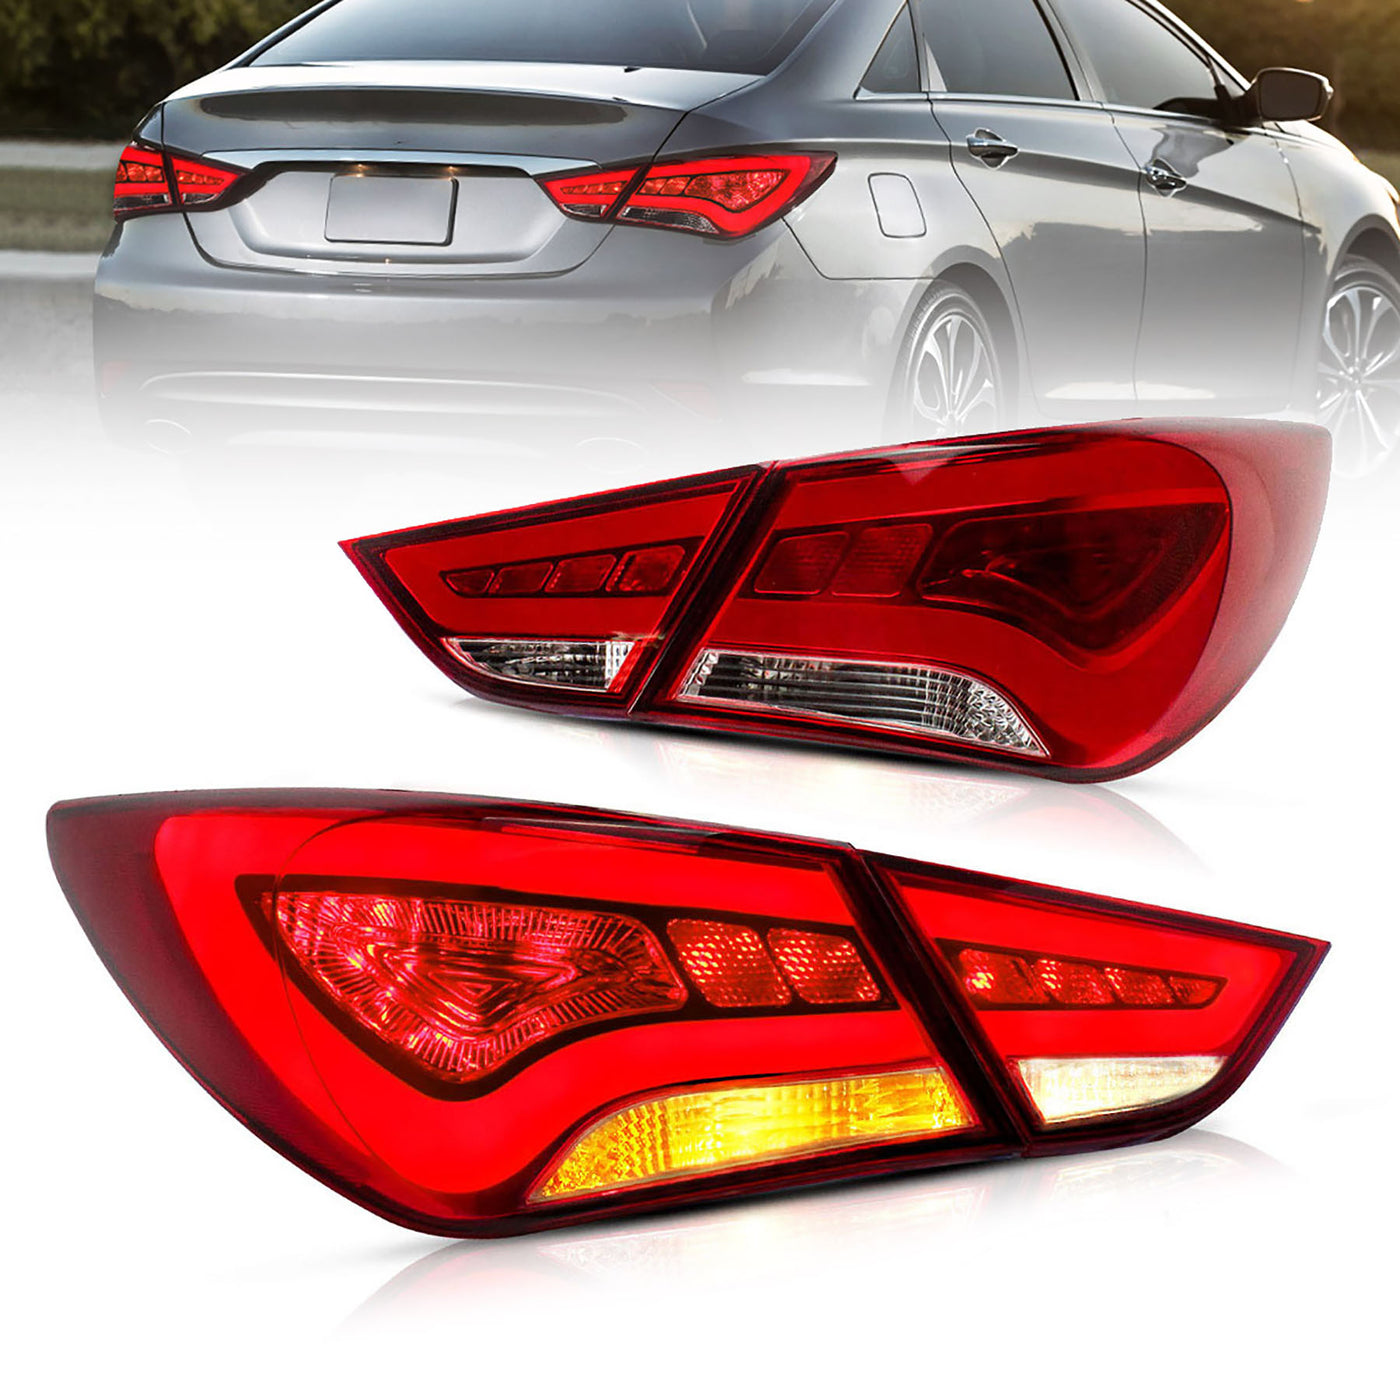 VLAND Full LED Tail Lights For Hyundai Sonata 6th Gen Sedan 2011-2014 ...